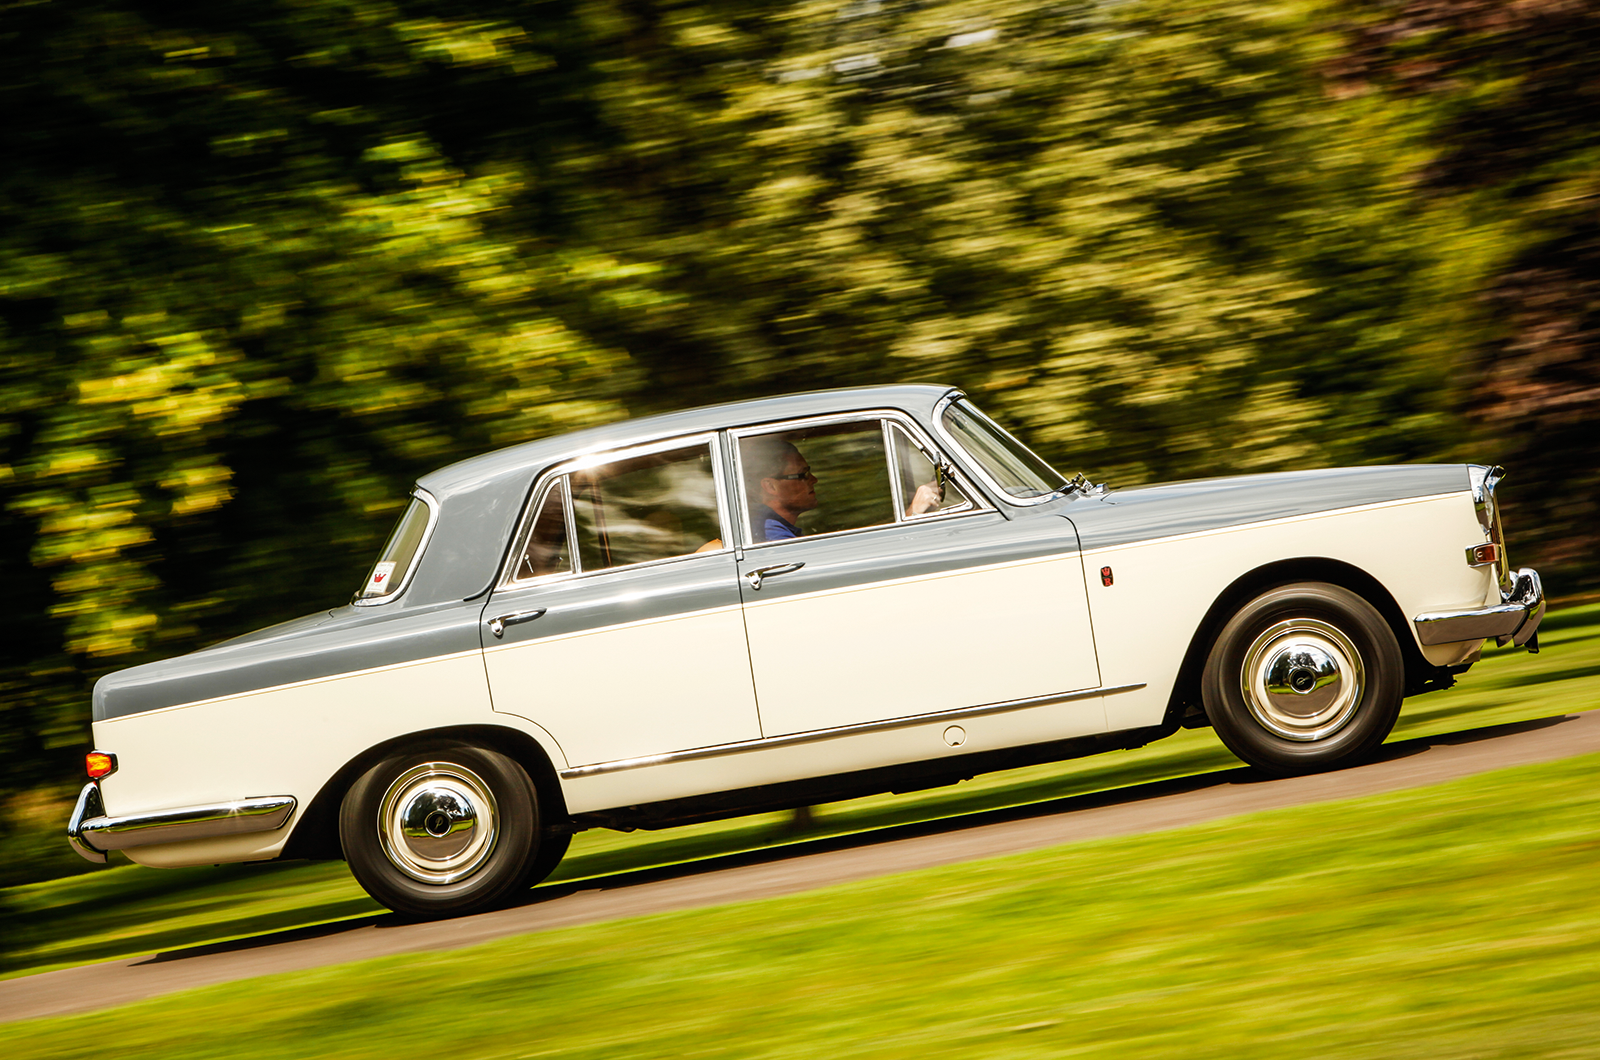 Classic & Sports Car - Humber Imperial vs Vanden Plas Princess 4 Litre R: to the manor borne